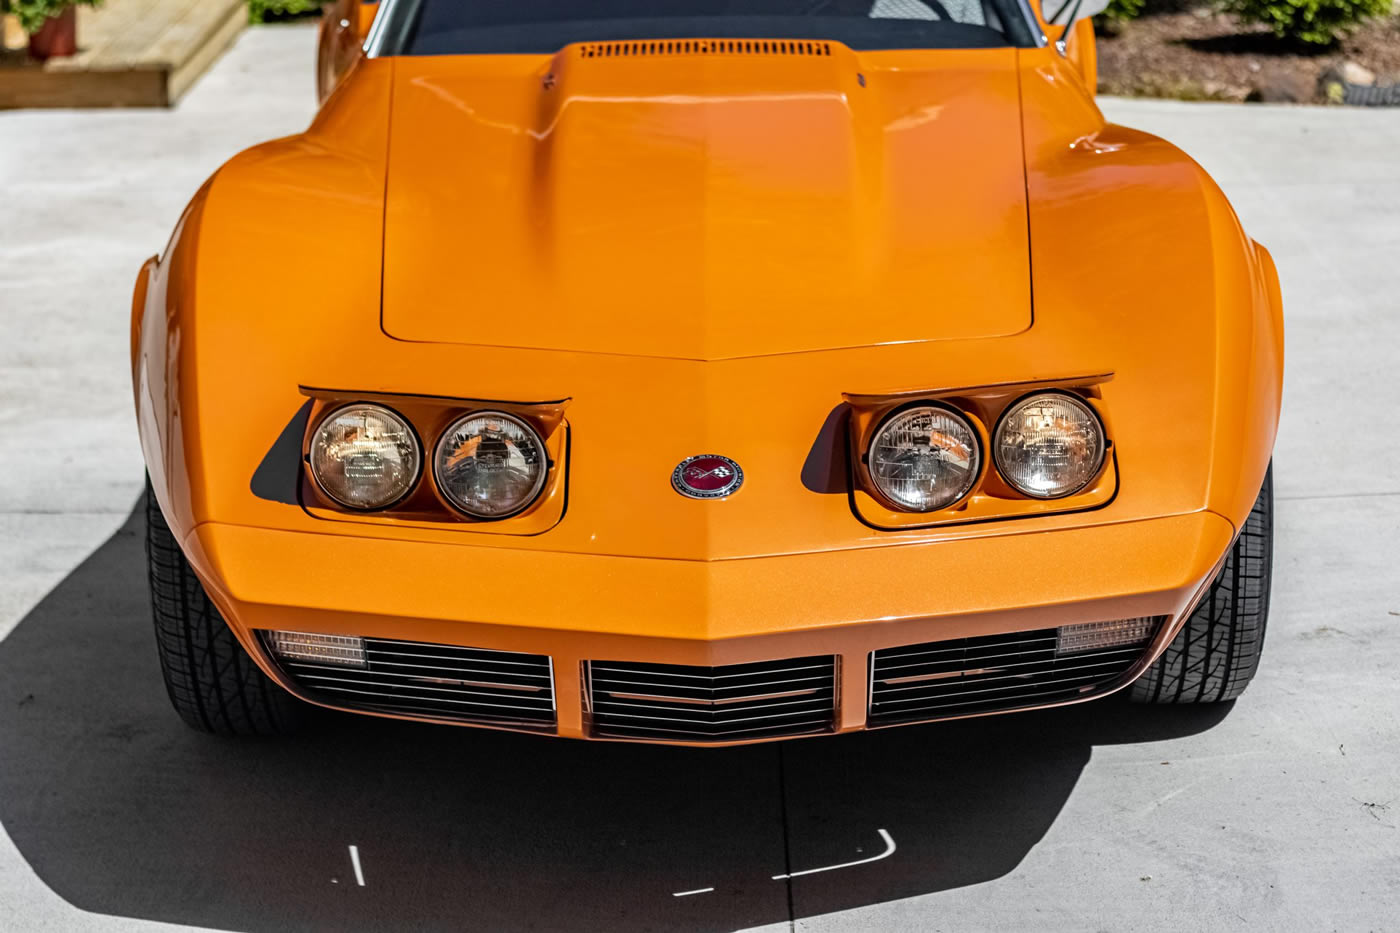 1973 Corvette Convertible 454 4-Speed in Orange